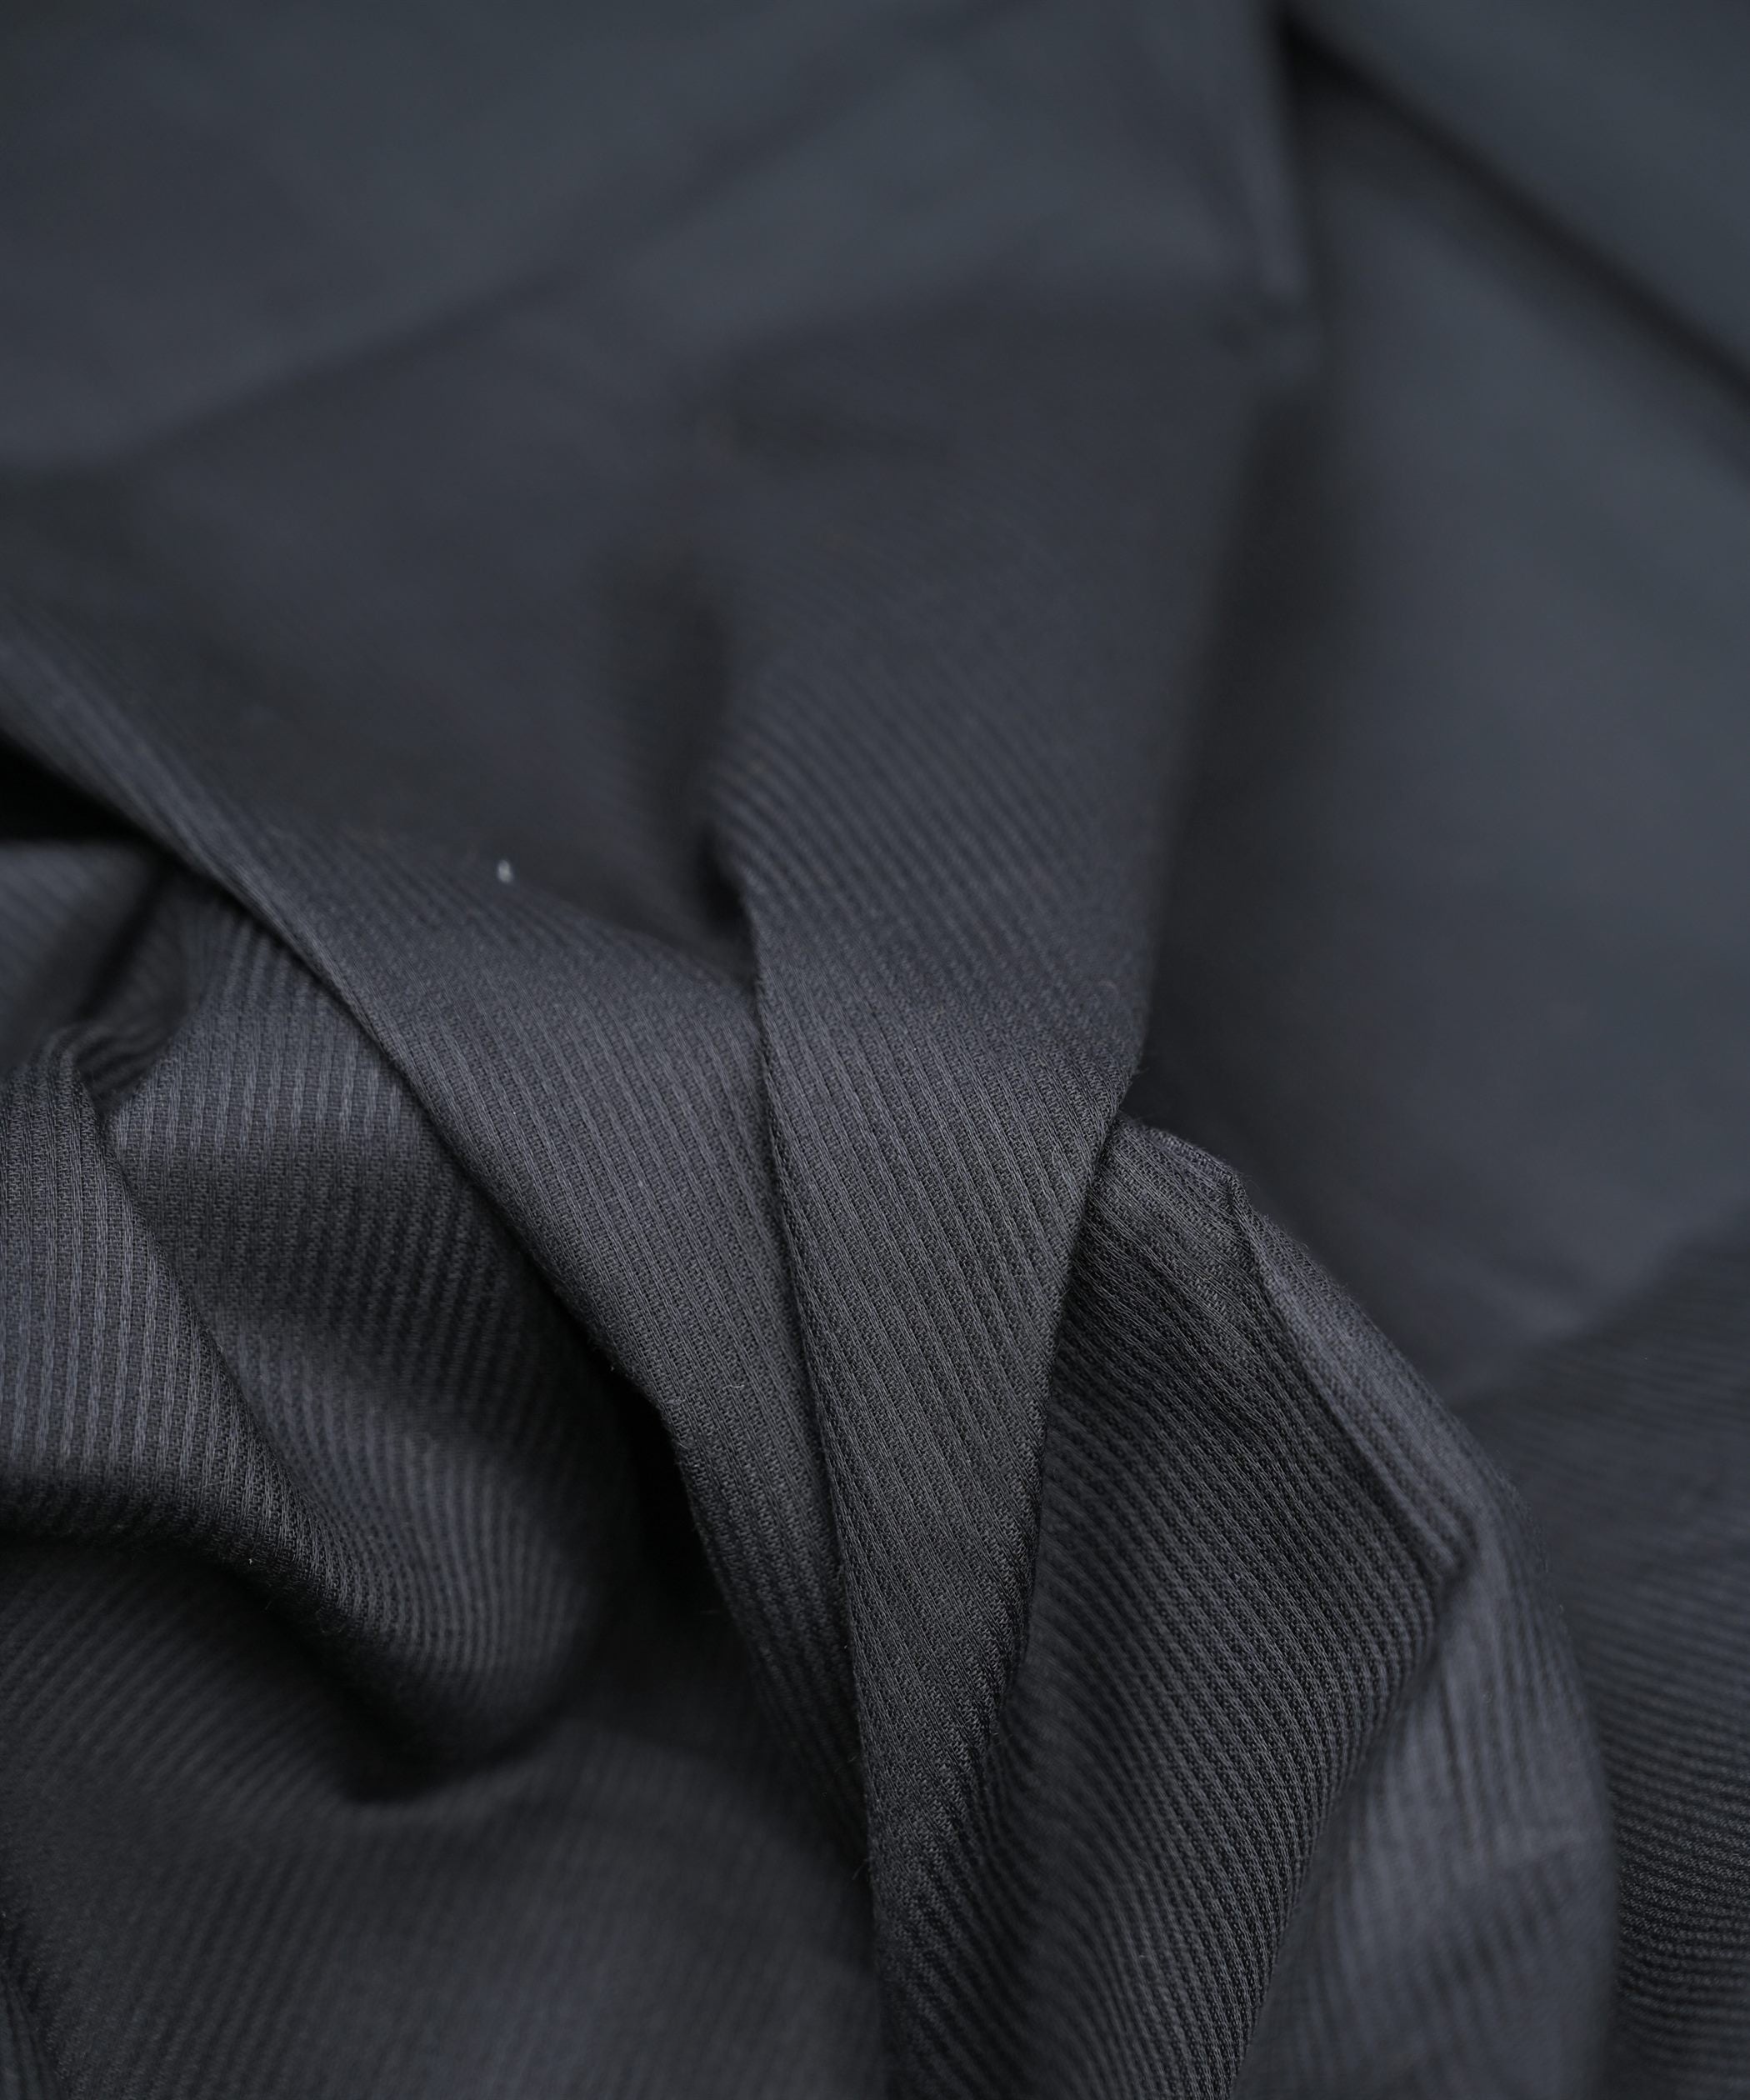 Black Plain Dyed Striped Cotton Fabric